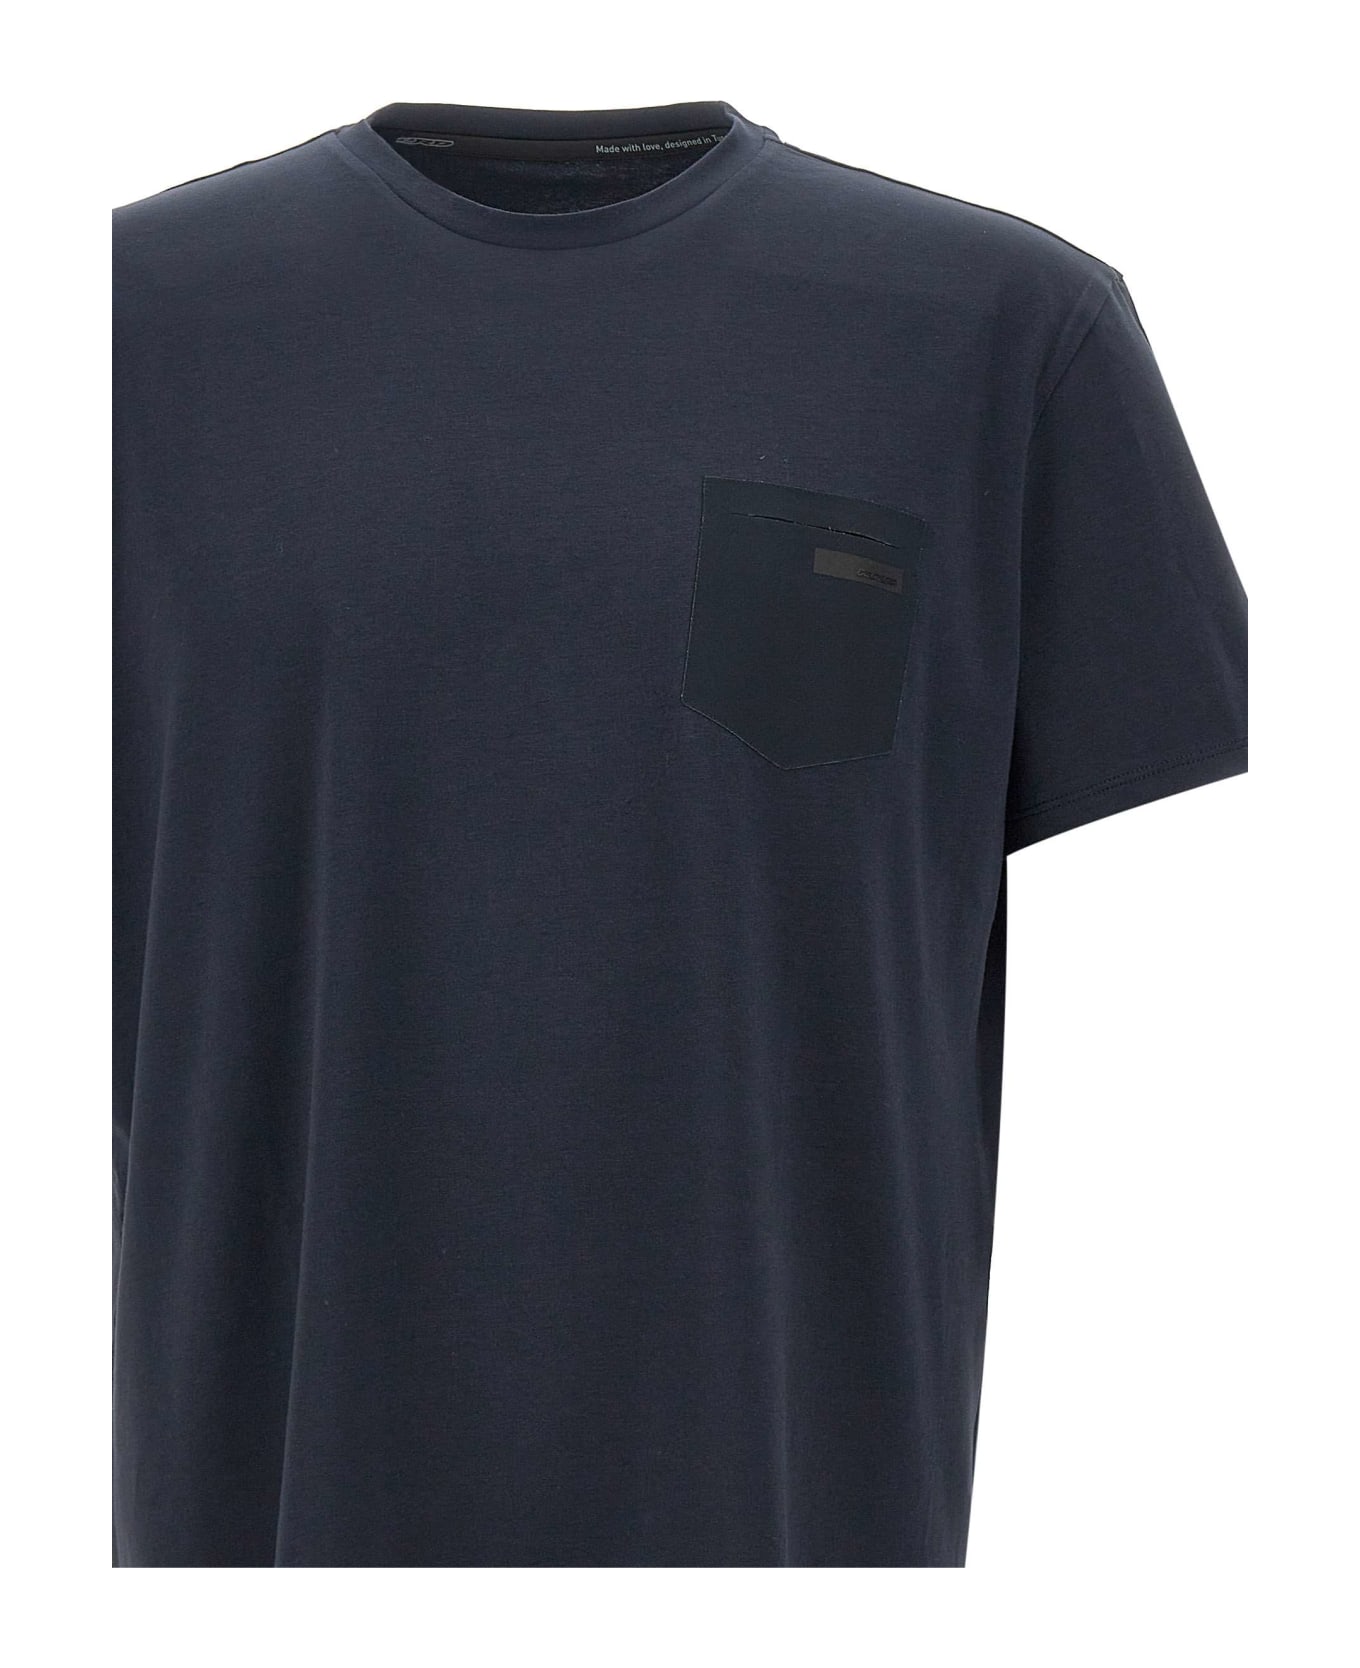 RRD - Roberto Ricci Design 'revo Shirty' T-shirt RRD - Roberto Ricci Design